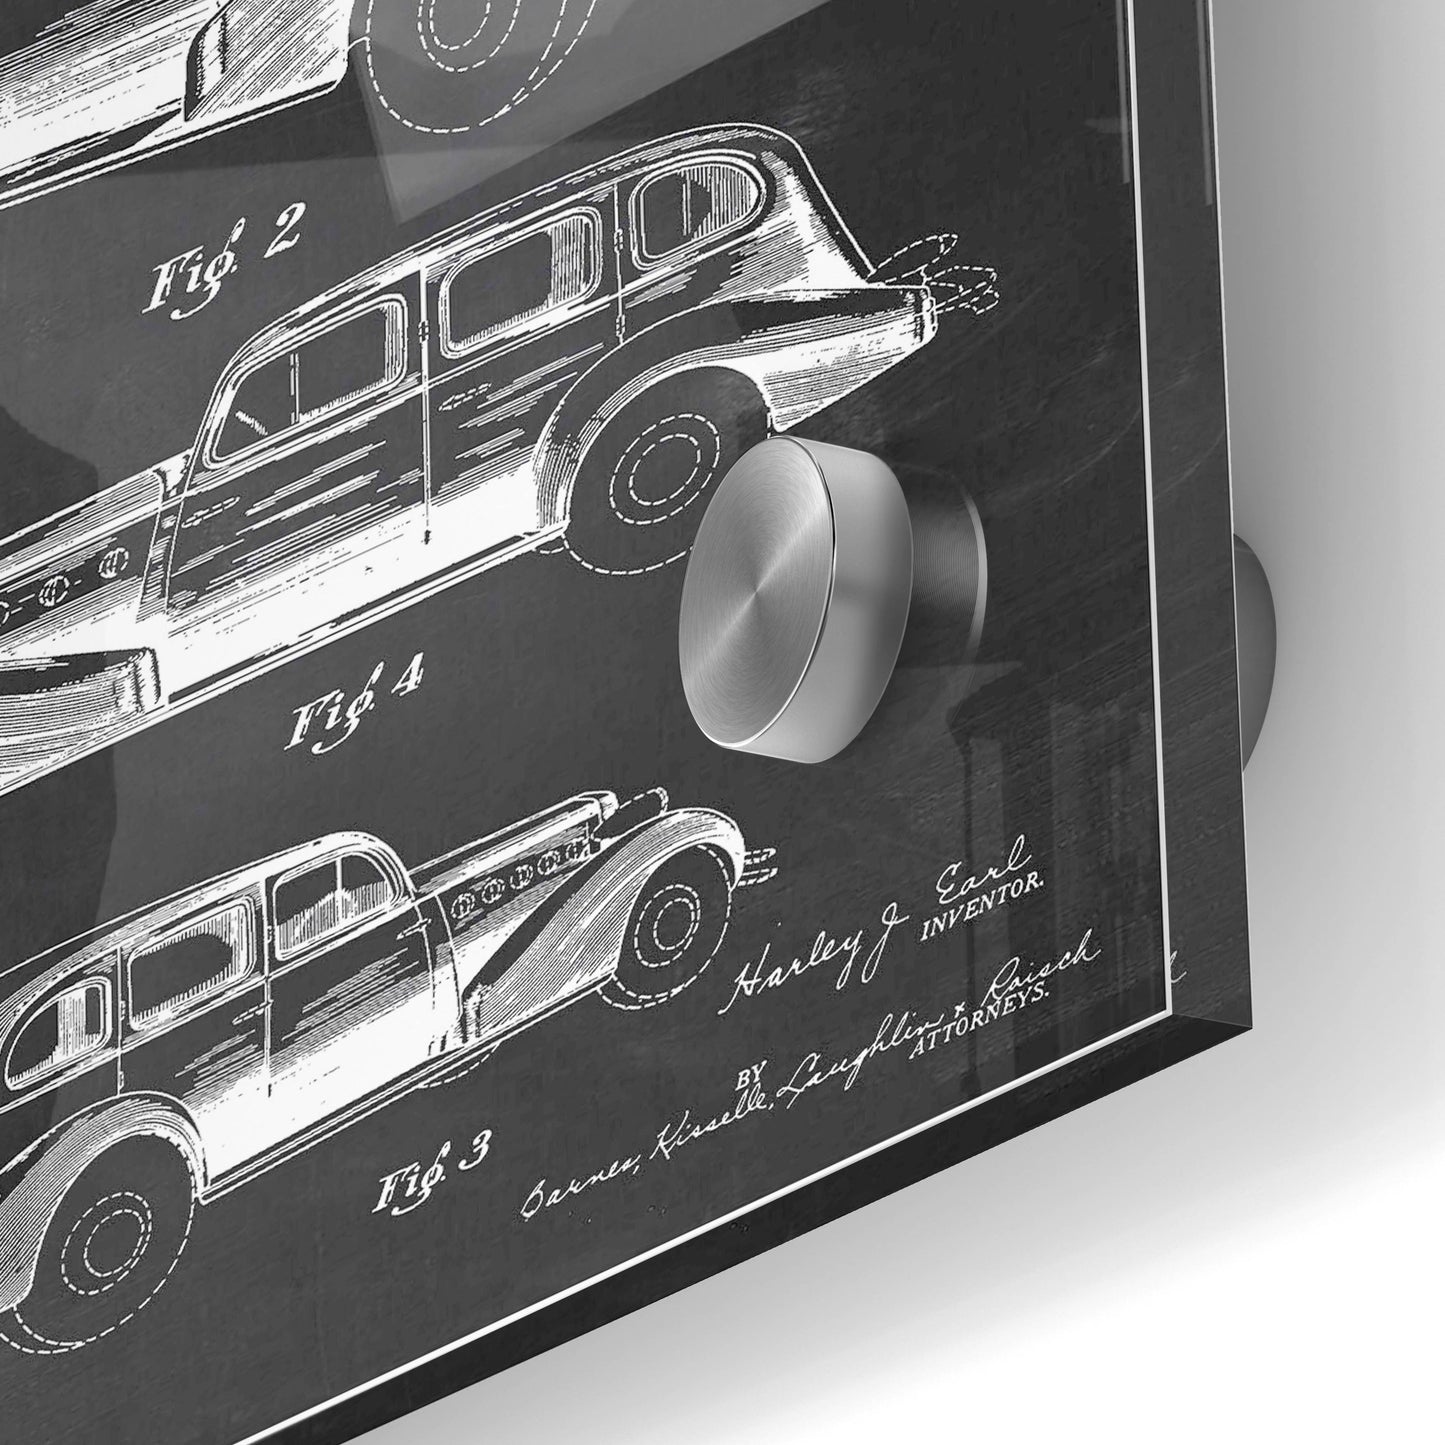 Epic Art 'Luxury Automobile Blueprint Patent Chalkboard' Acrylic Glass Wall Art,24x36